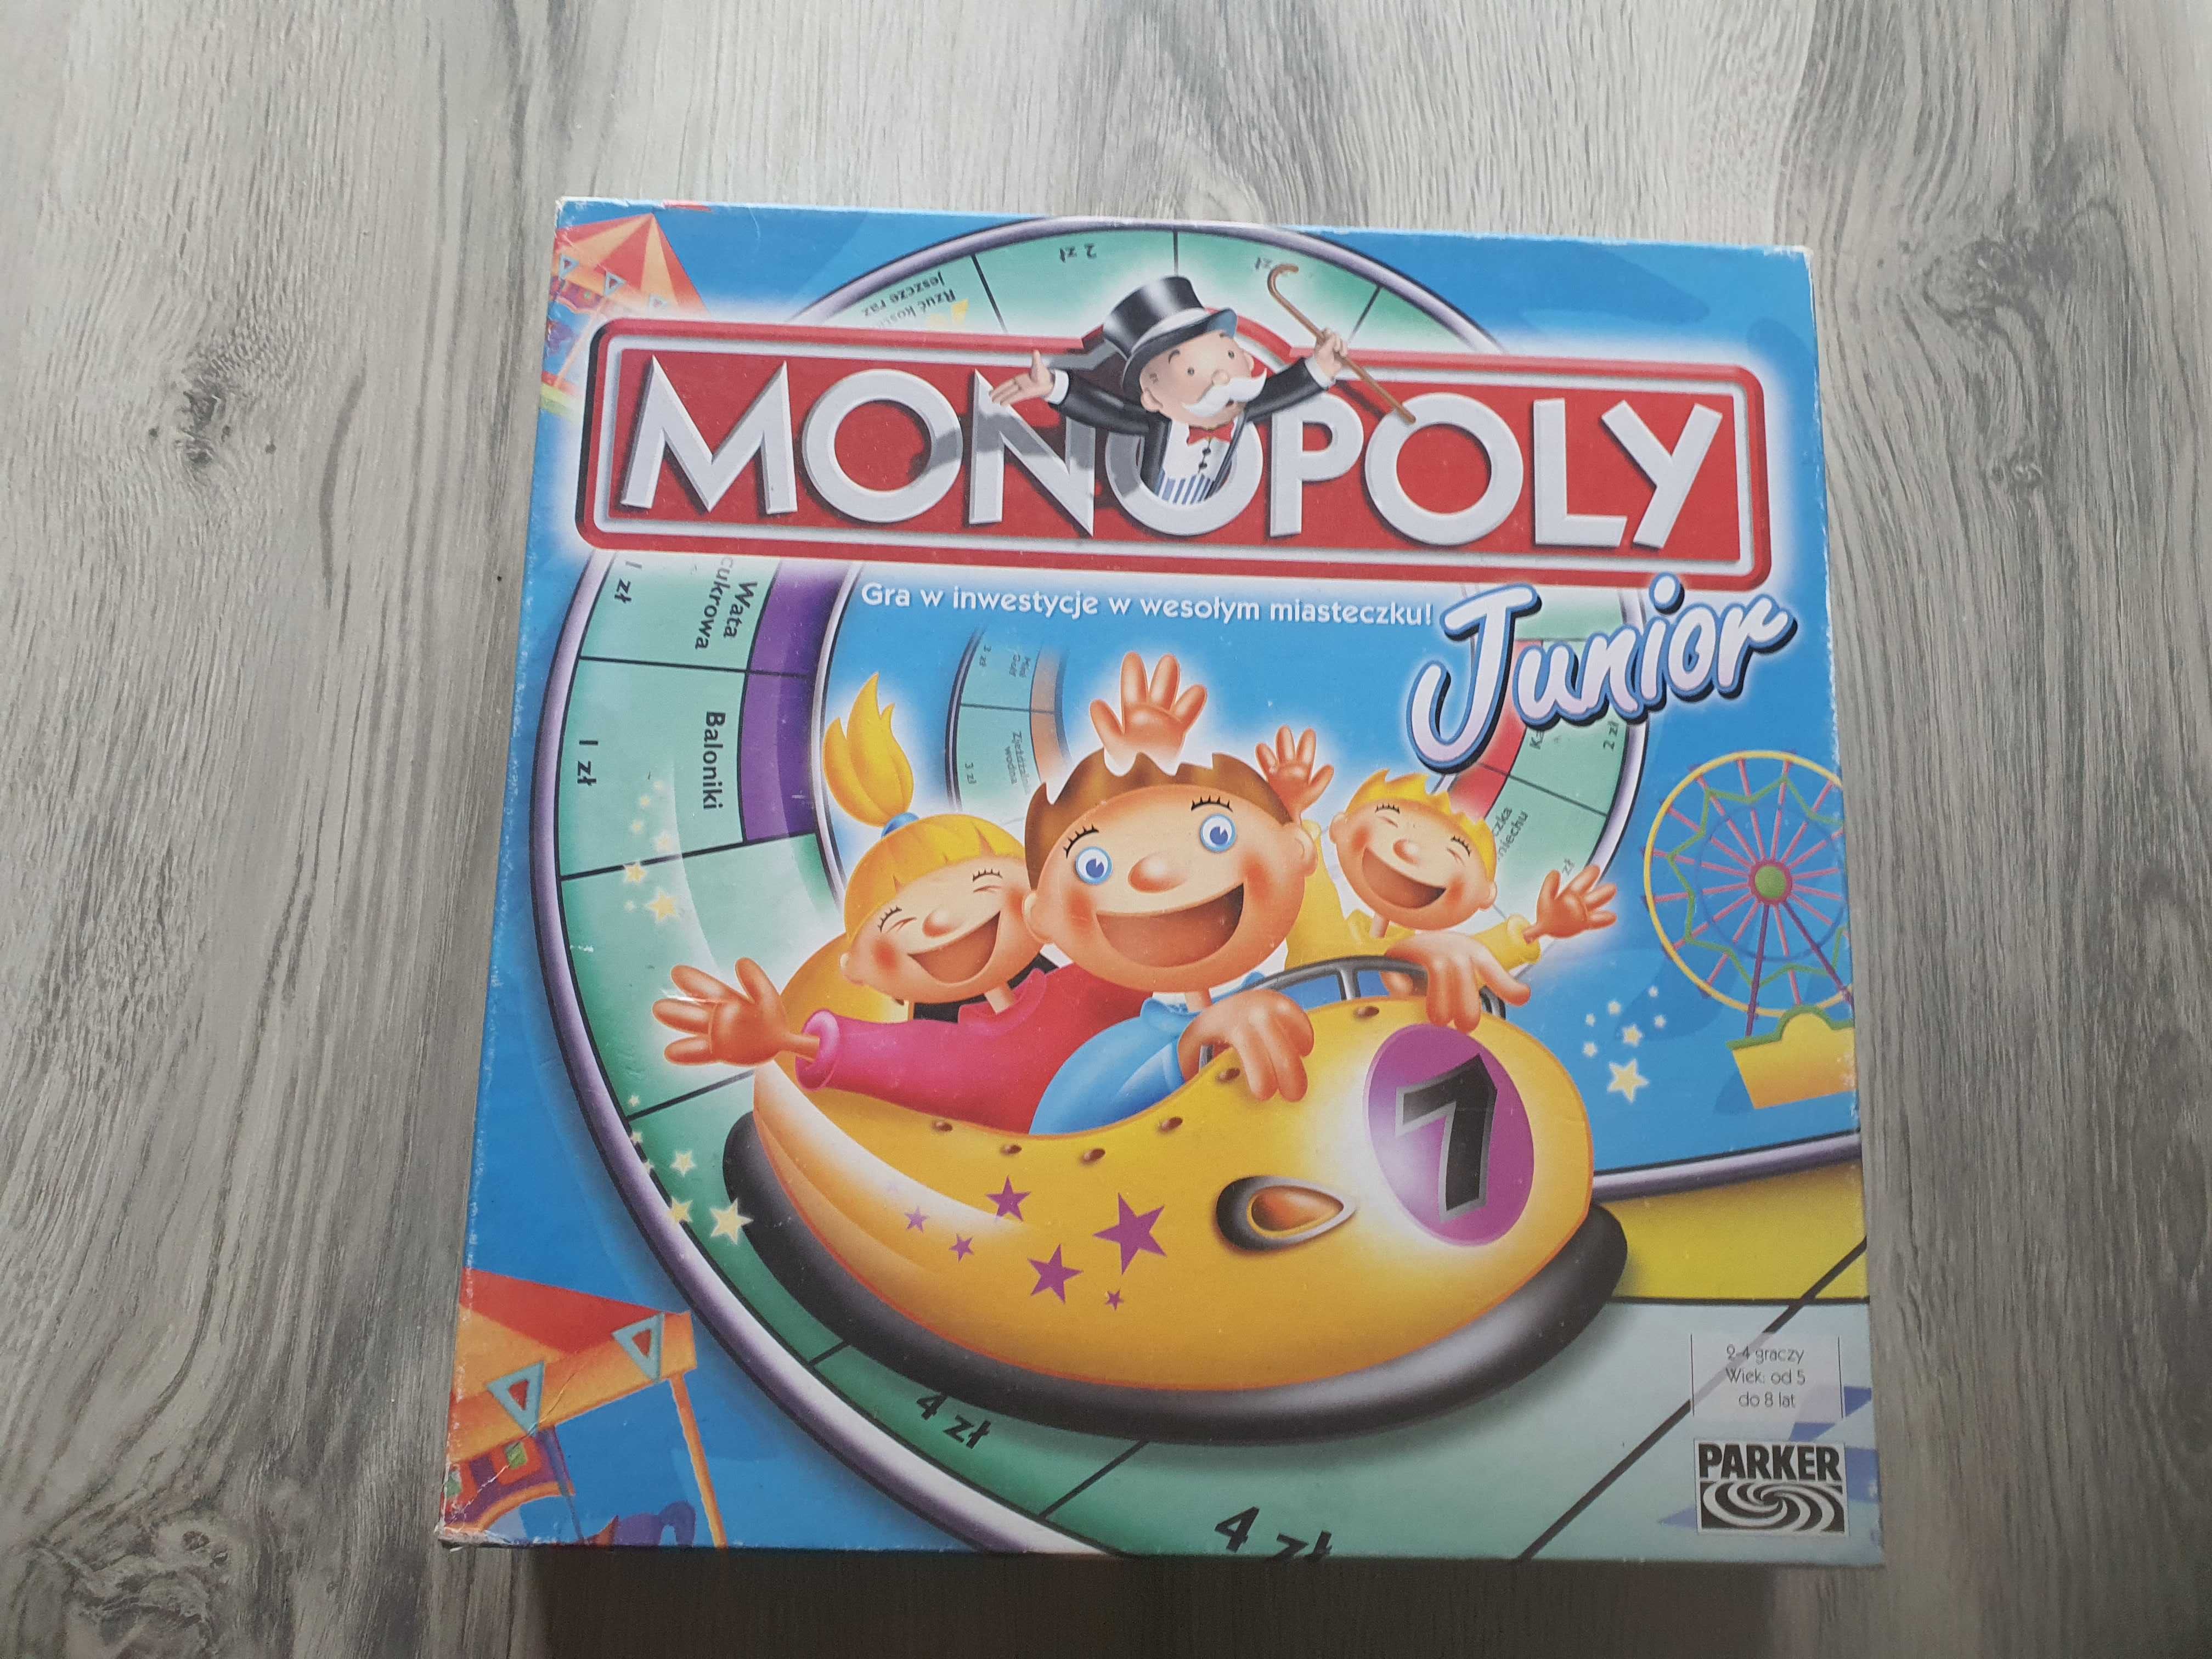 Monopoly junior, wesołe miasteczko.